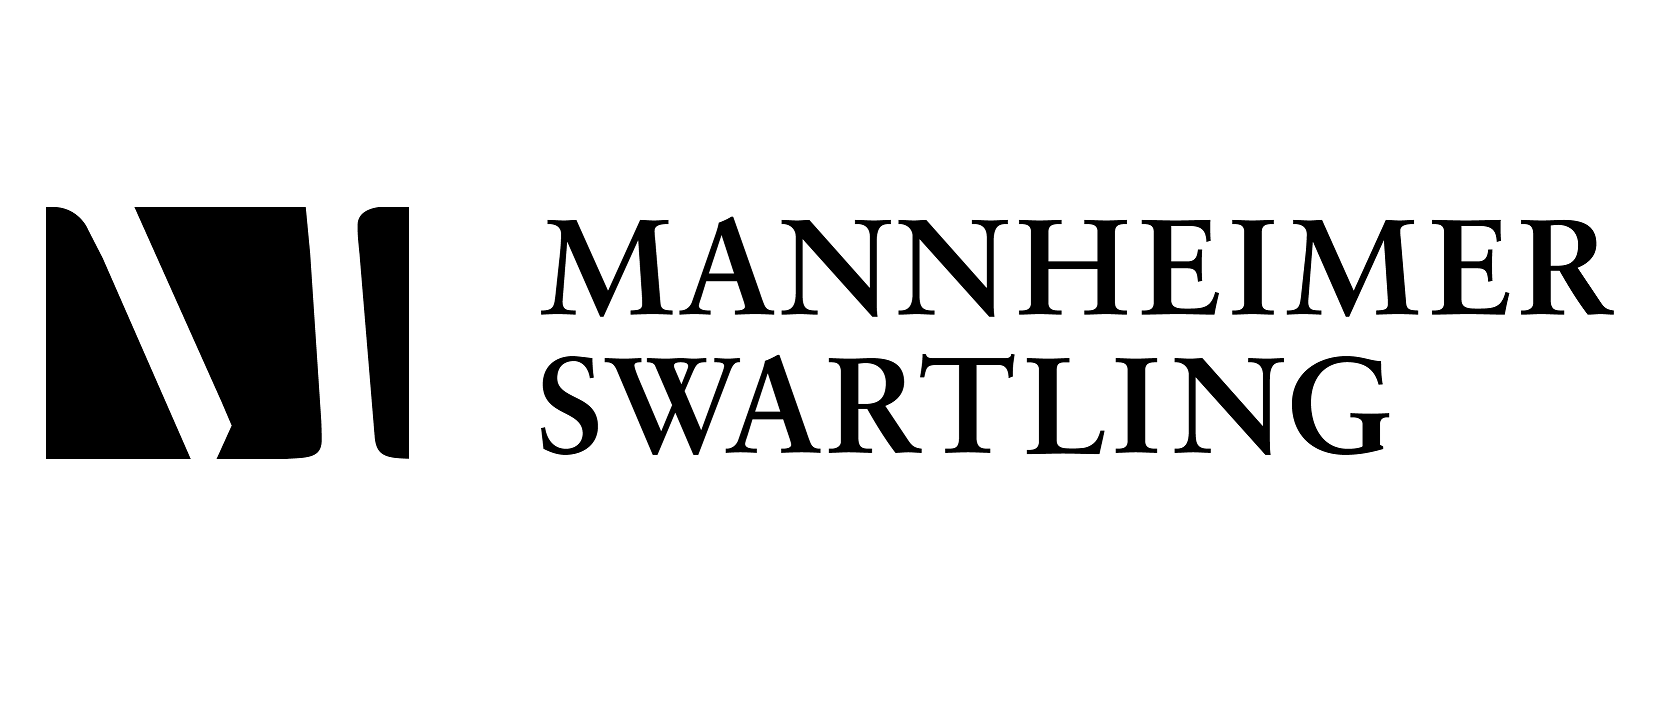 Mannheimer Swartling - Sandvik and Shandong Energy Machinery Form Joint Venture